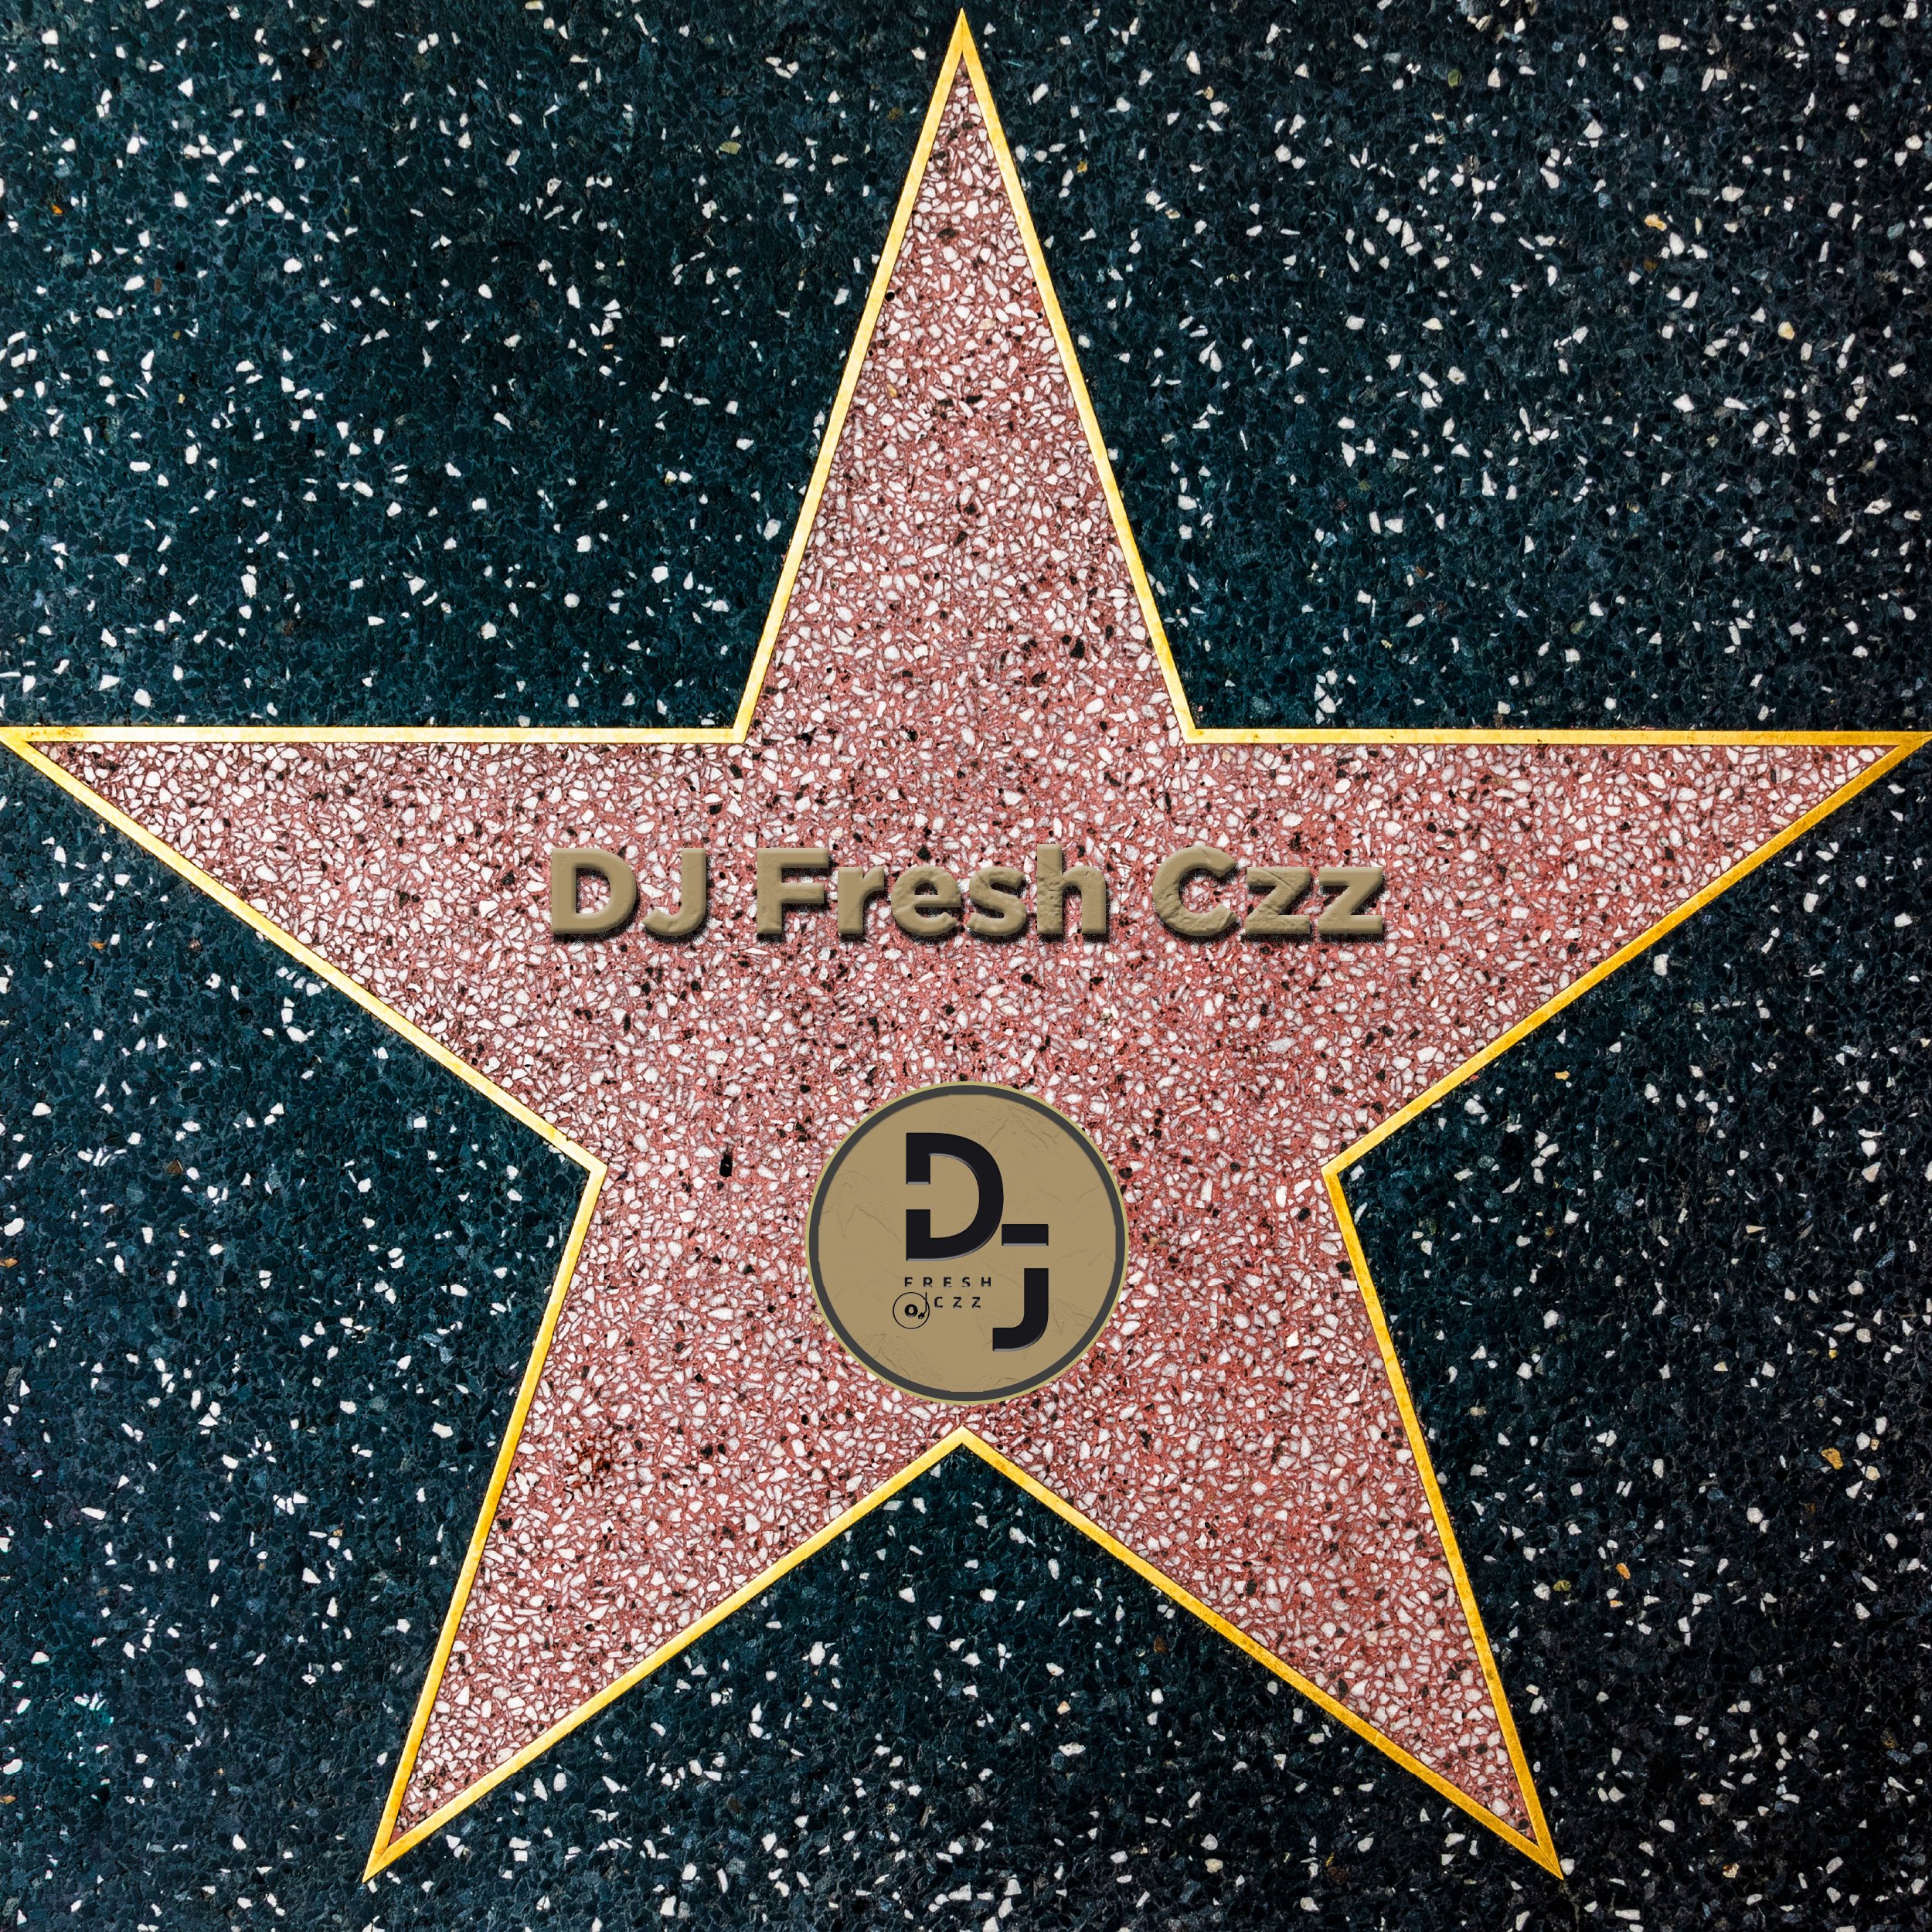 DJ Fresh Czz - Official TMMS DJ